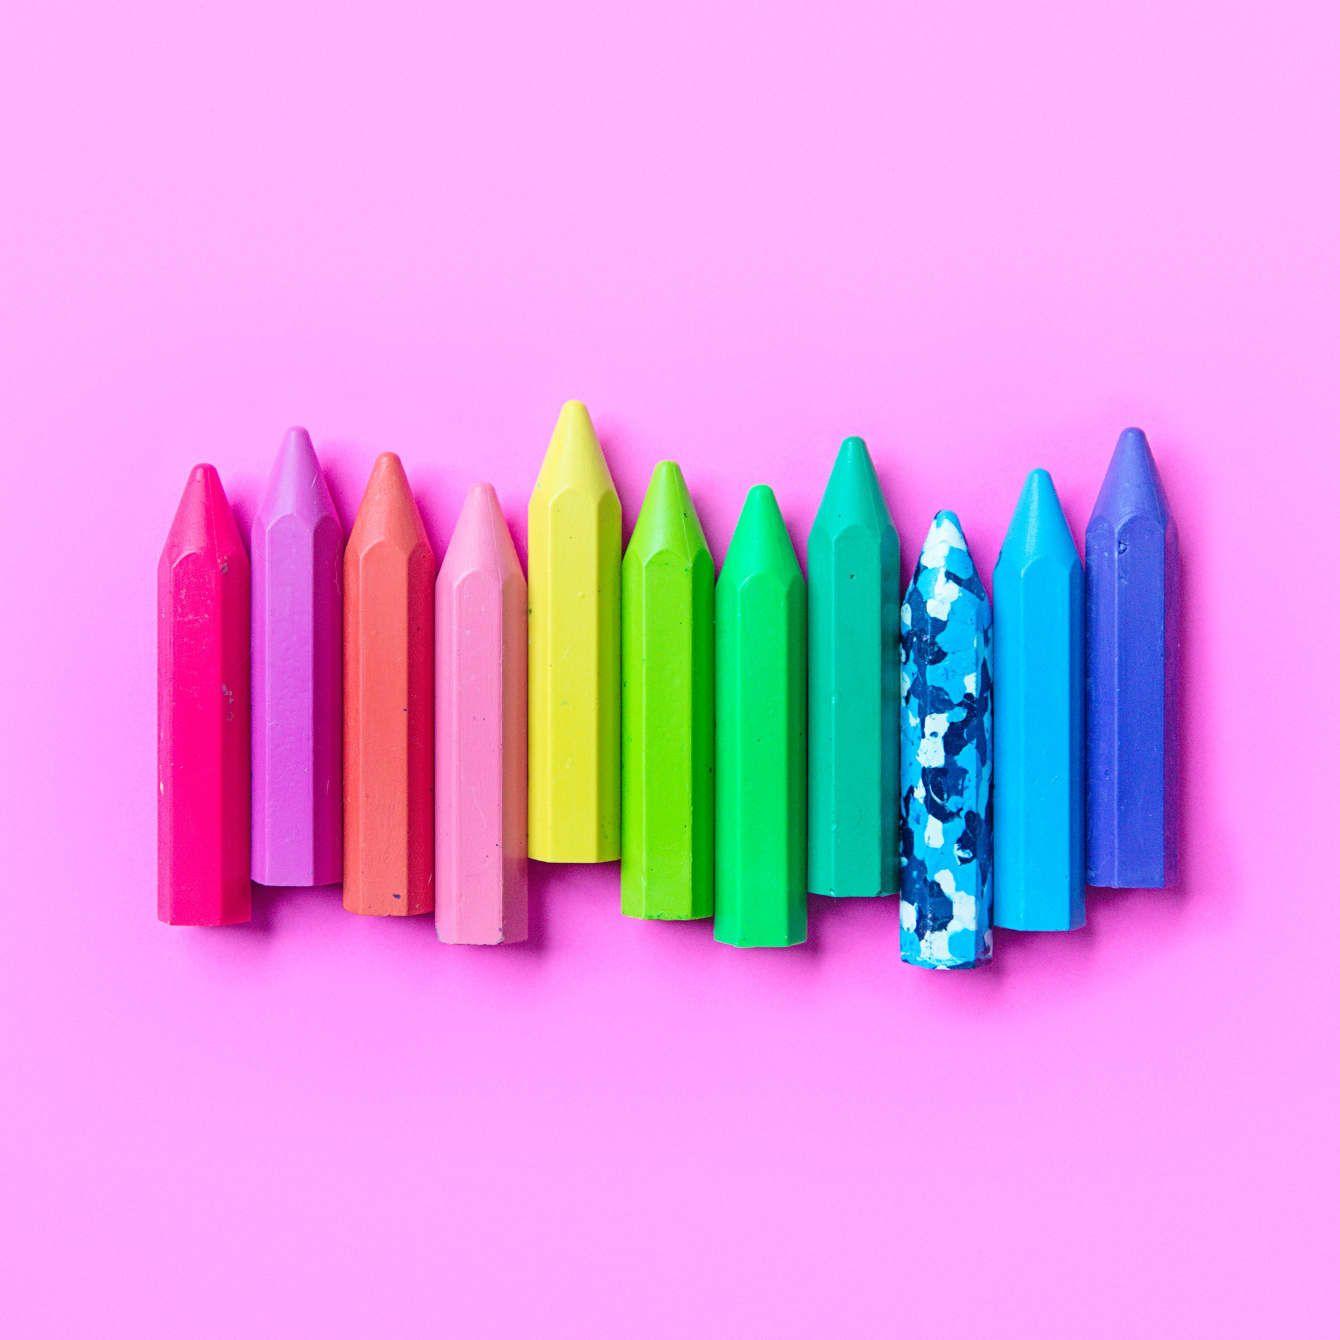 crayons - #candyminimal by matt crump. ART. THE TRIBE